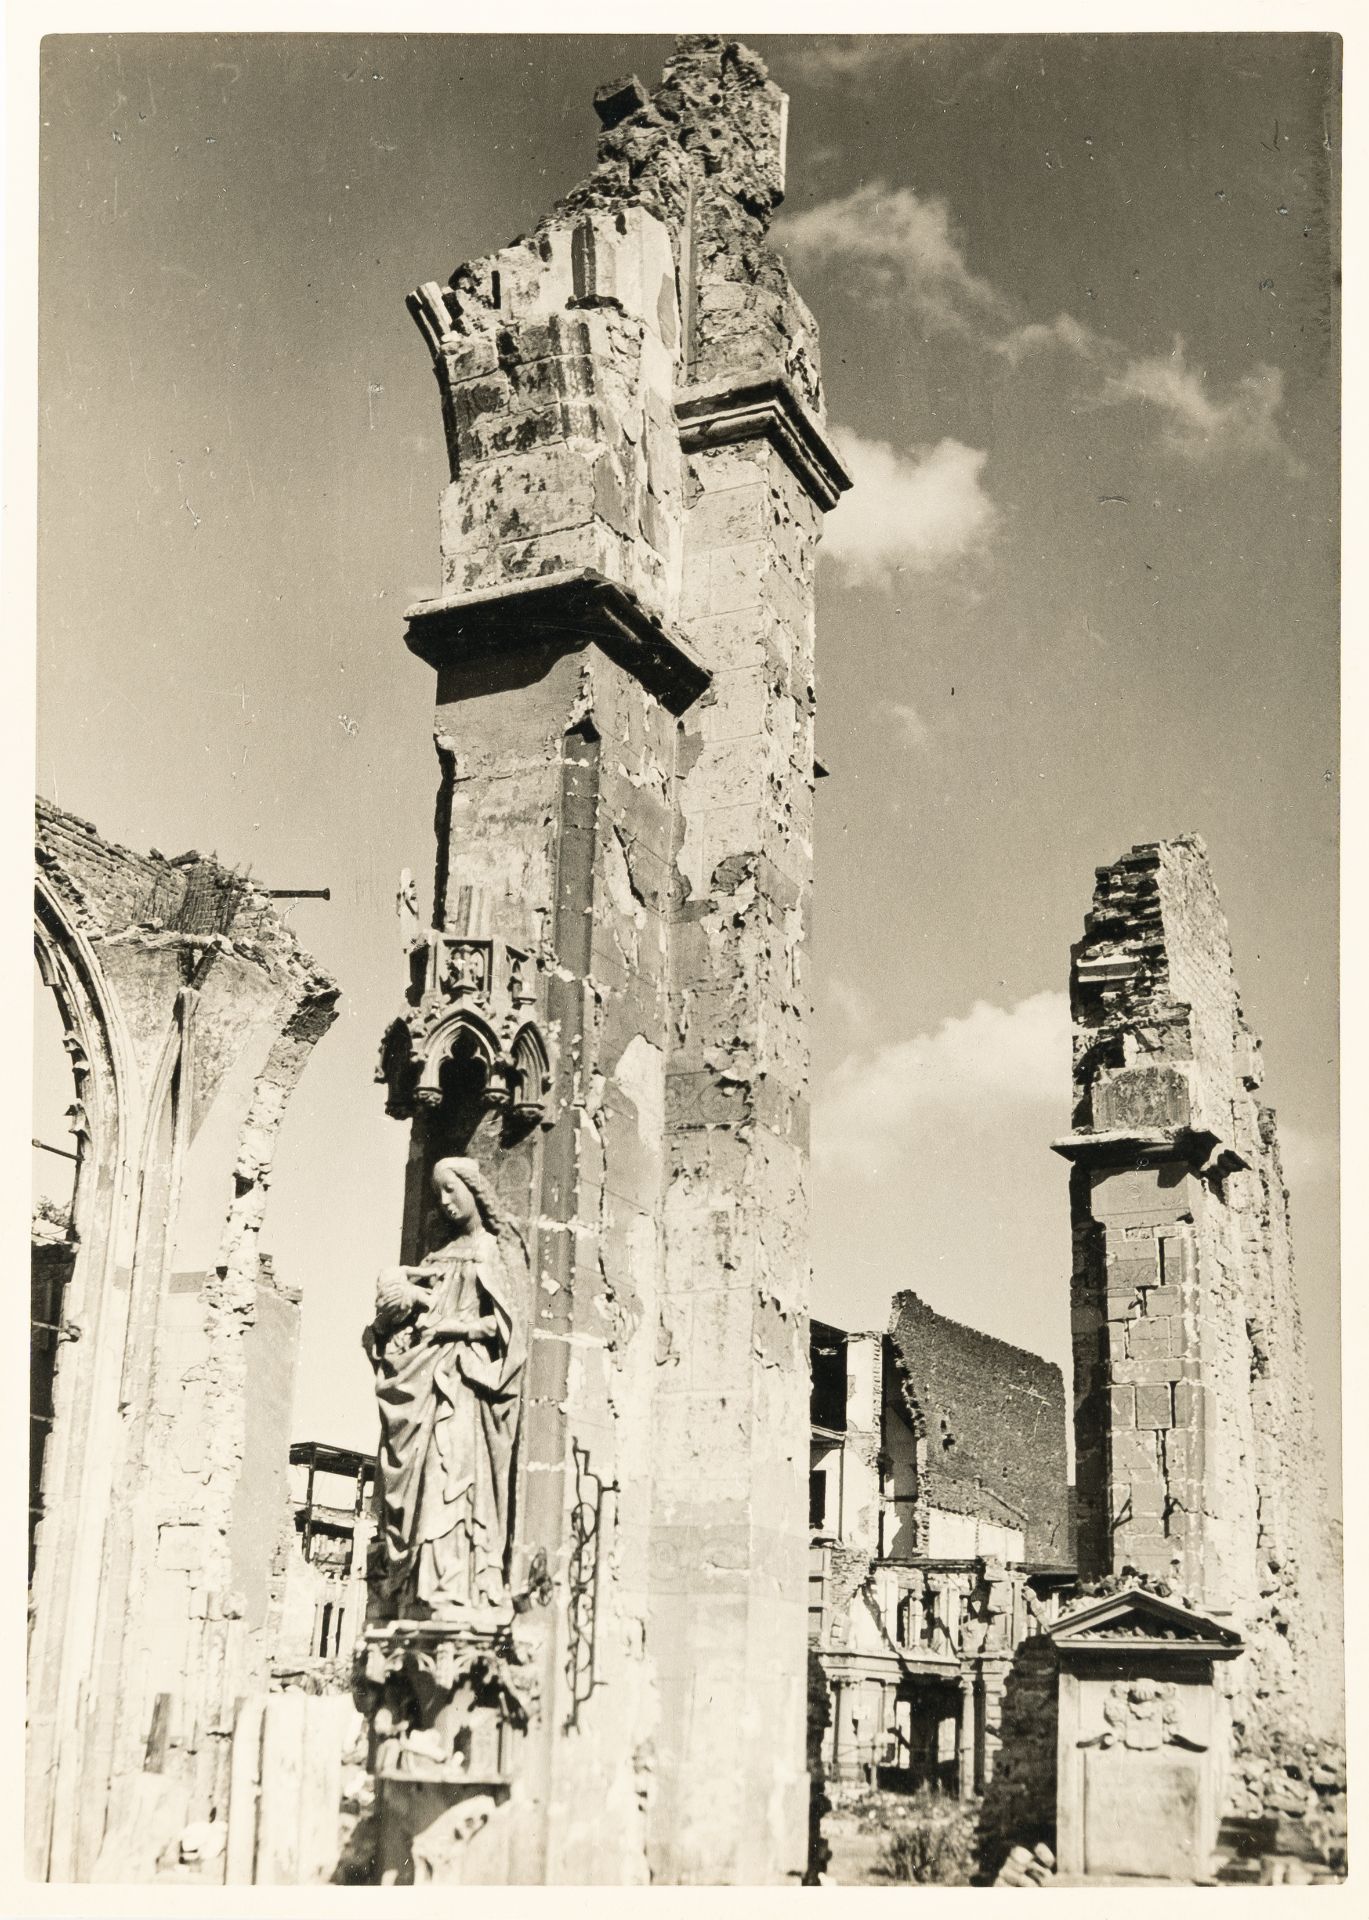 Robert Seuffert – Die Madonna in den Trümmern (The Virgin among the rubble)